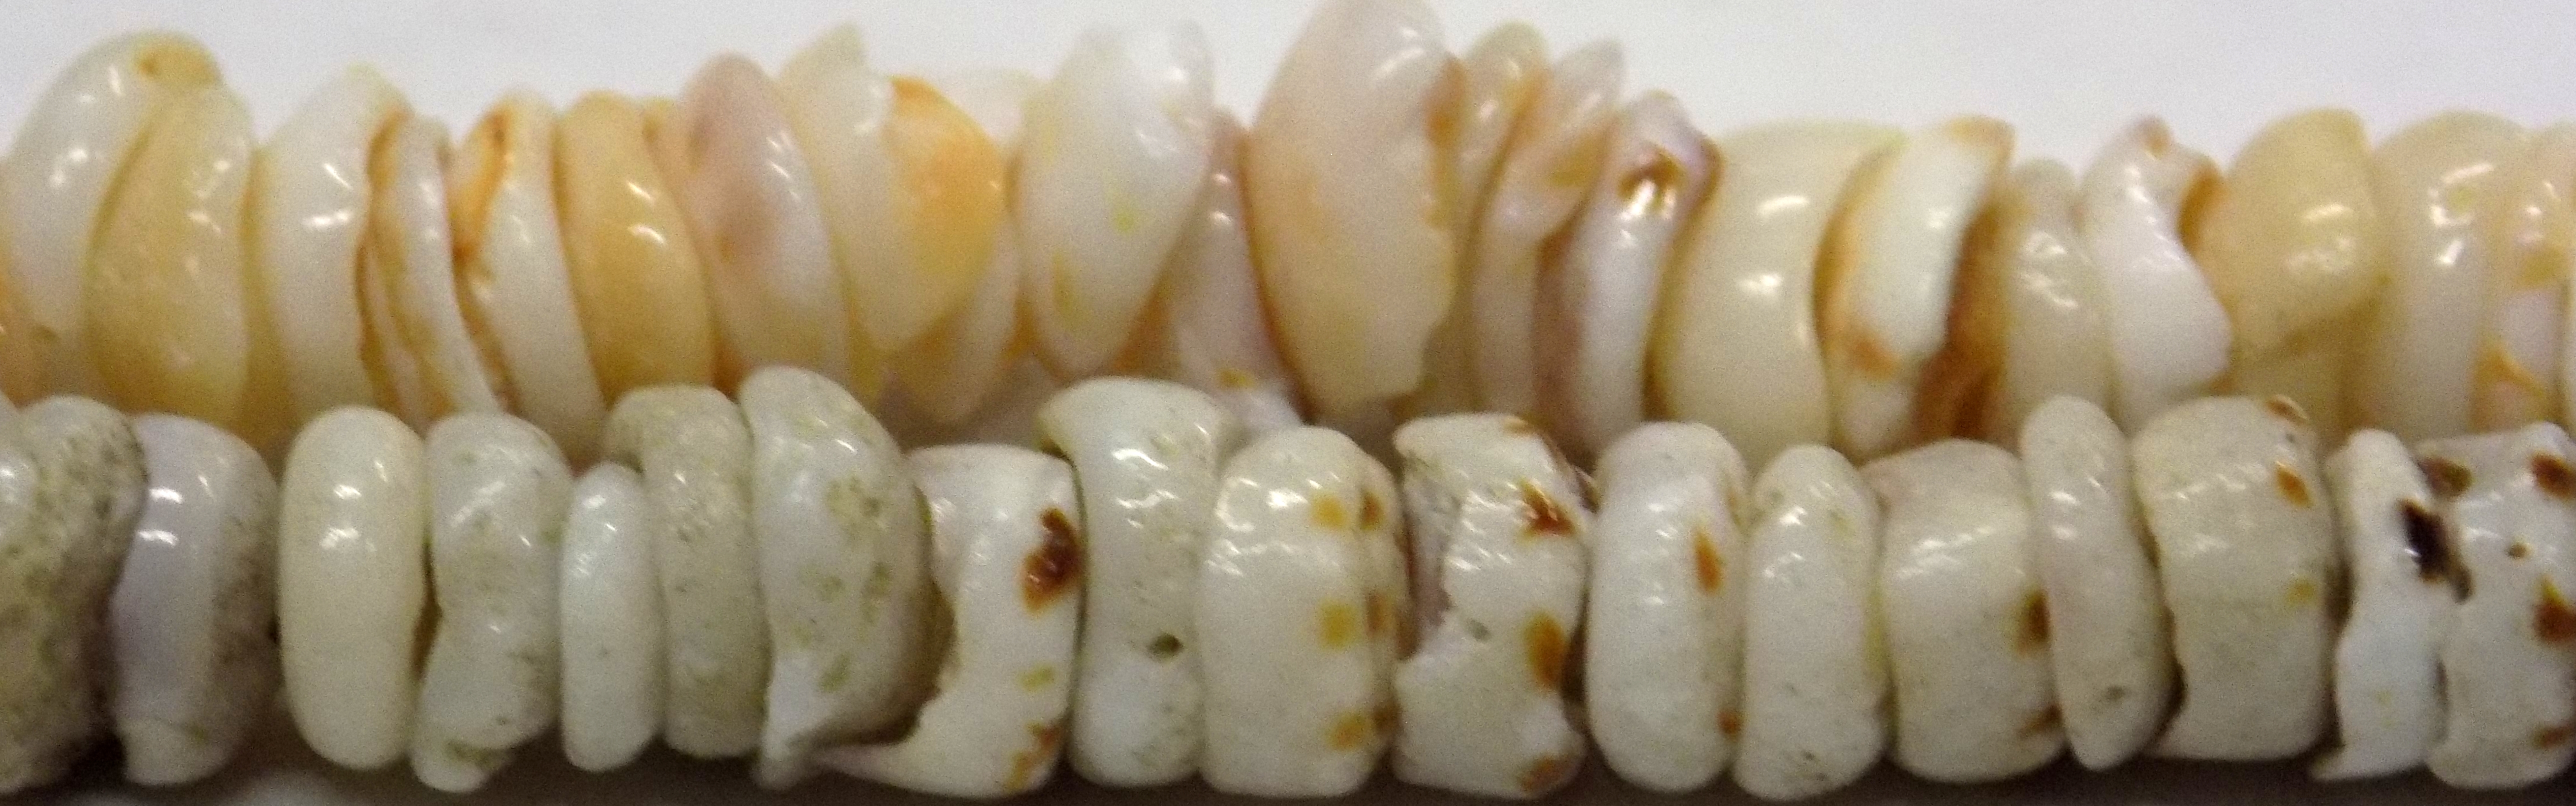 Puka shell heishi wholesale beads